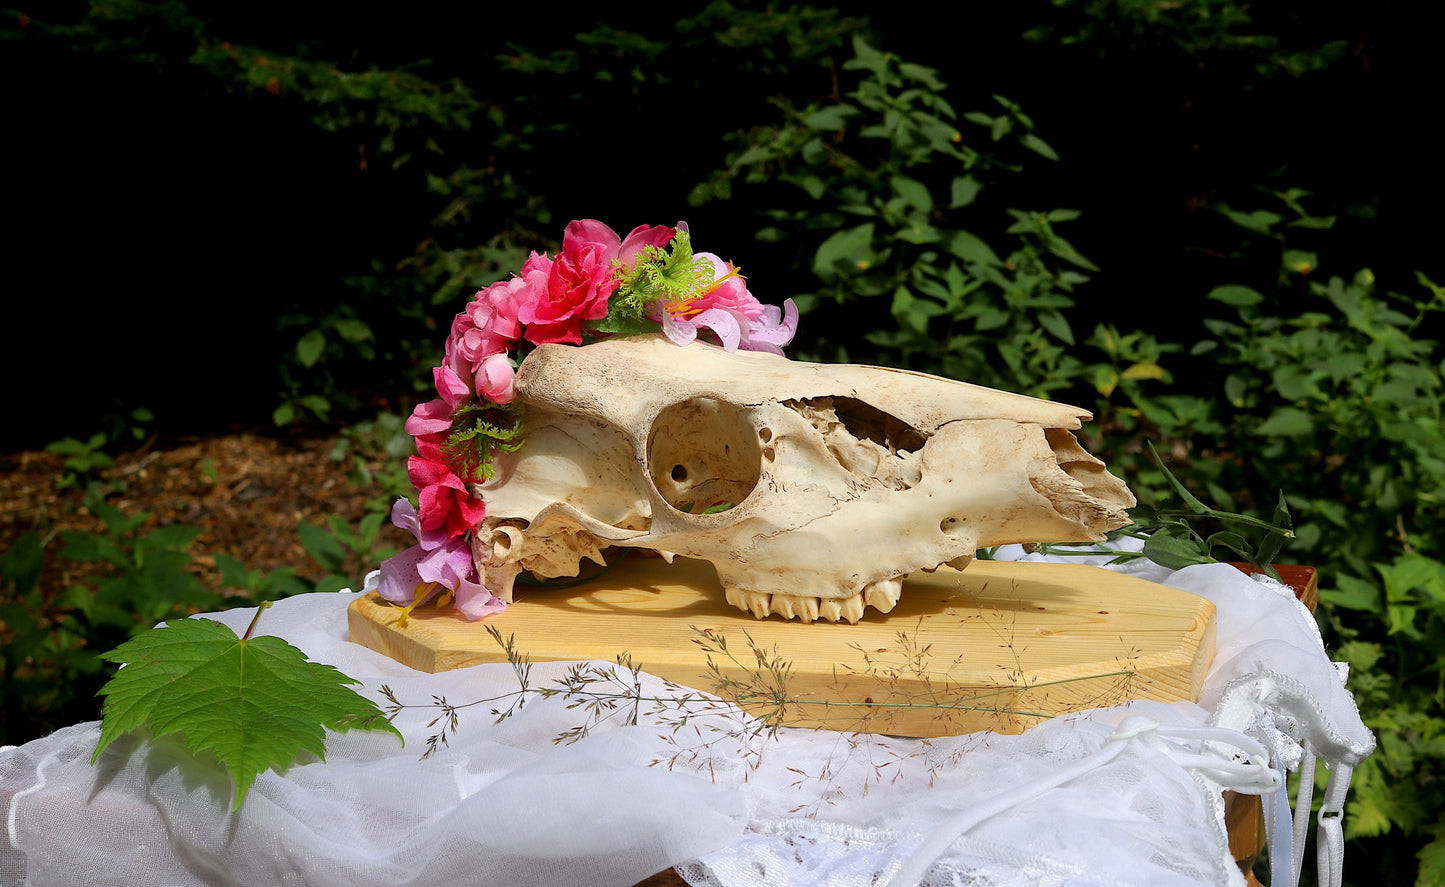 Framed Deer Skull with Flower Crown | Goblincore, Taxidermy Art Wall Decor | Dark Cottagecore, Witchy Gothic Home | Animal Bones Mementomori